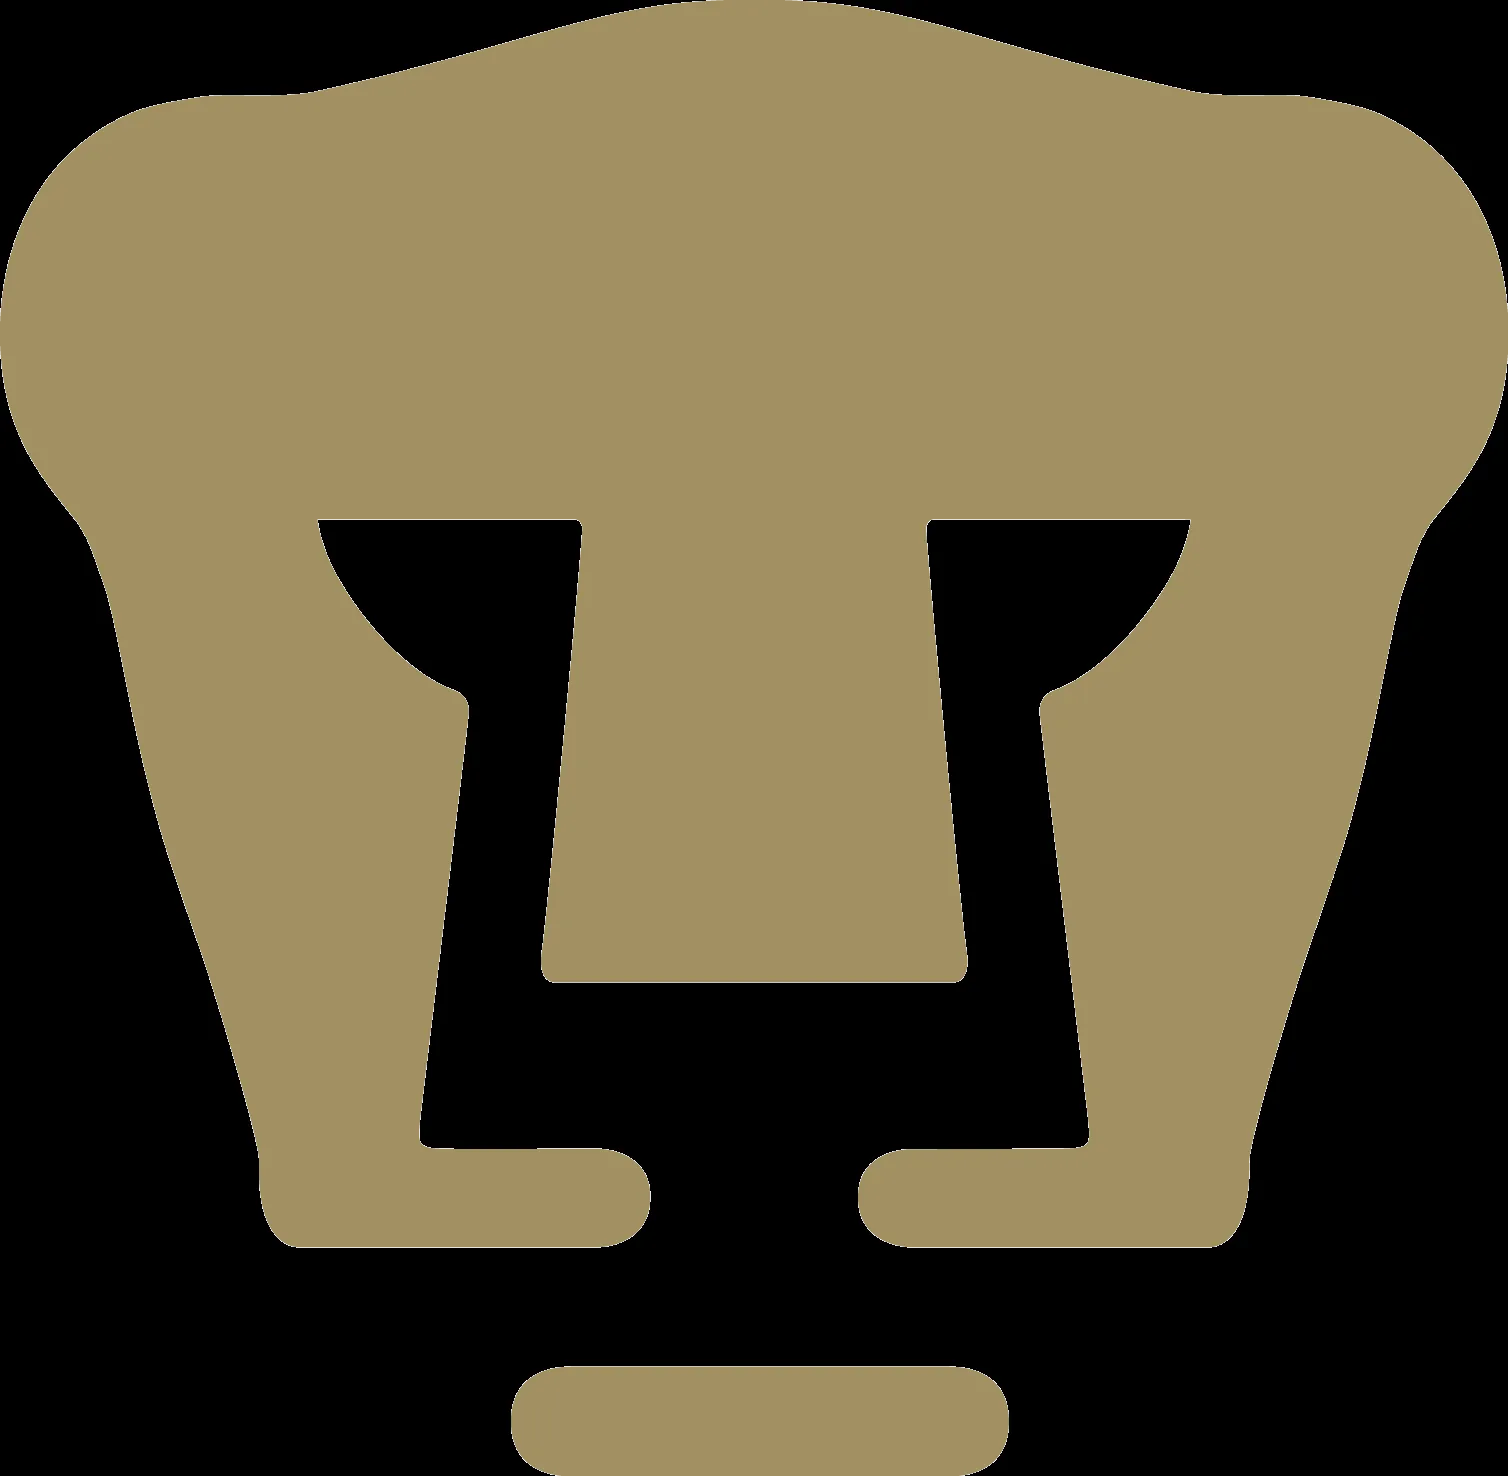 Images For > Pumas Unam Logo Vector